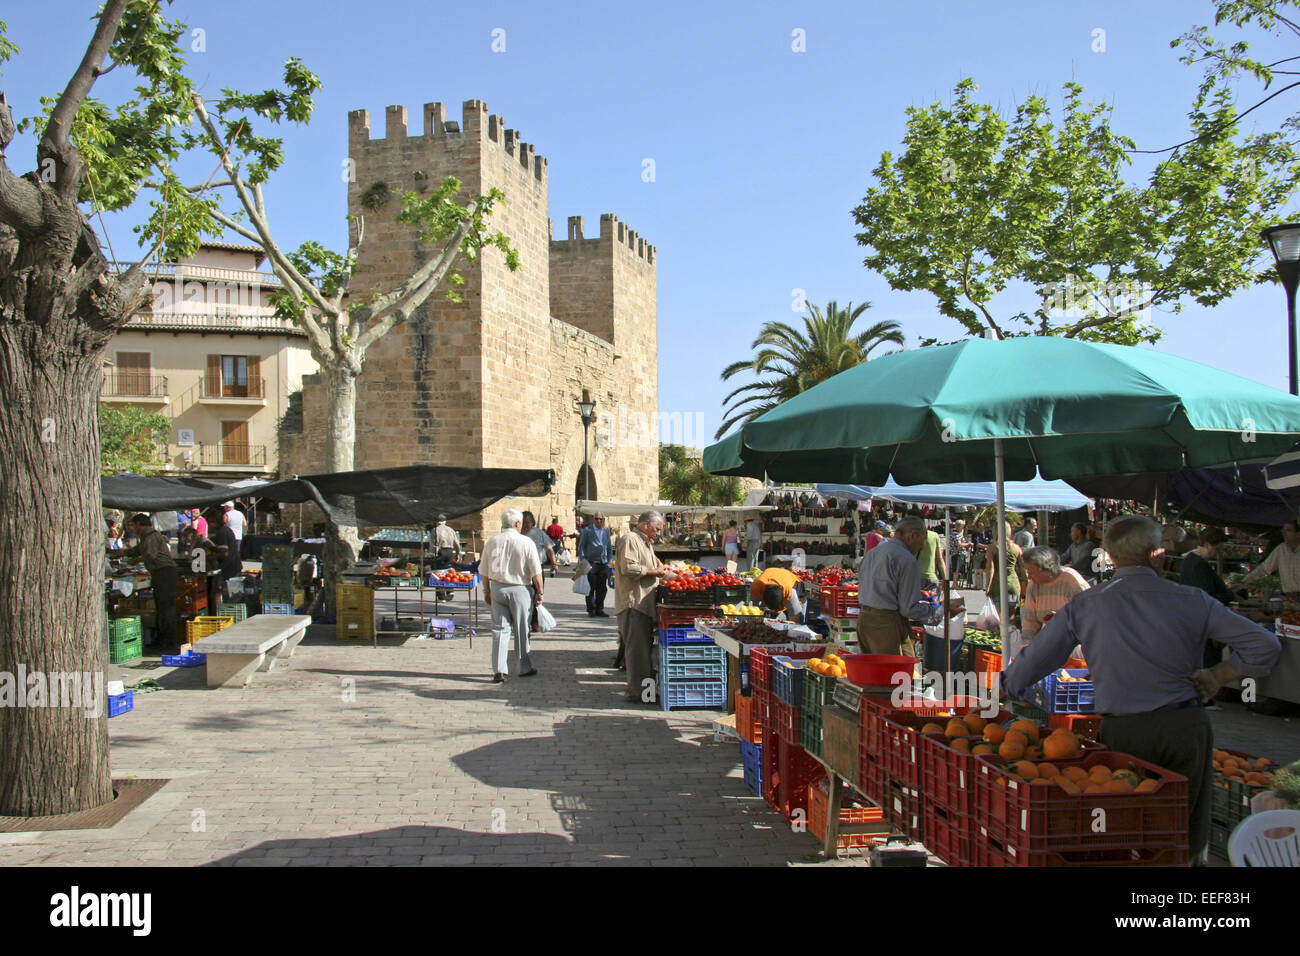 Spanien Mallorca Alcudia Markt Haendler Verkauf Lebensmittel No Model Release Mittelmeer Balearen Insel Wochenmarkt Marktstand N Stock Photo